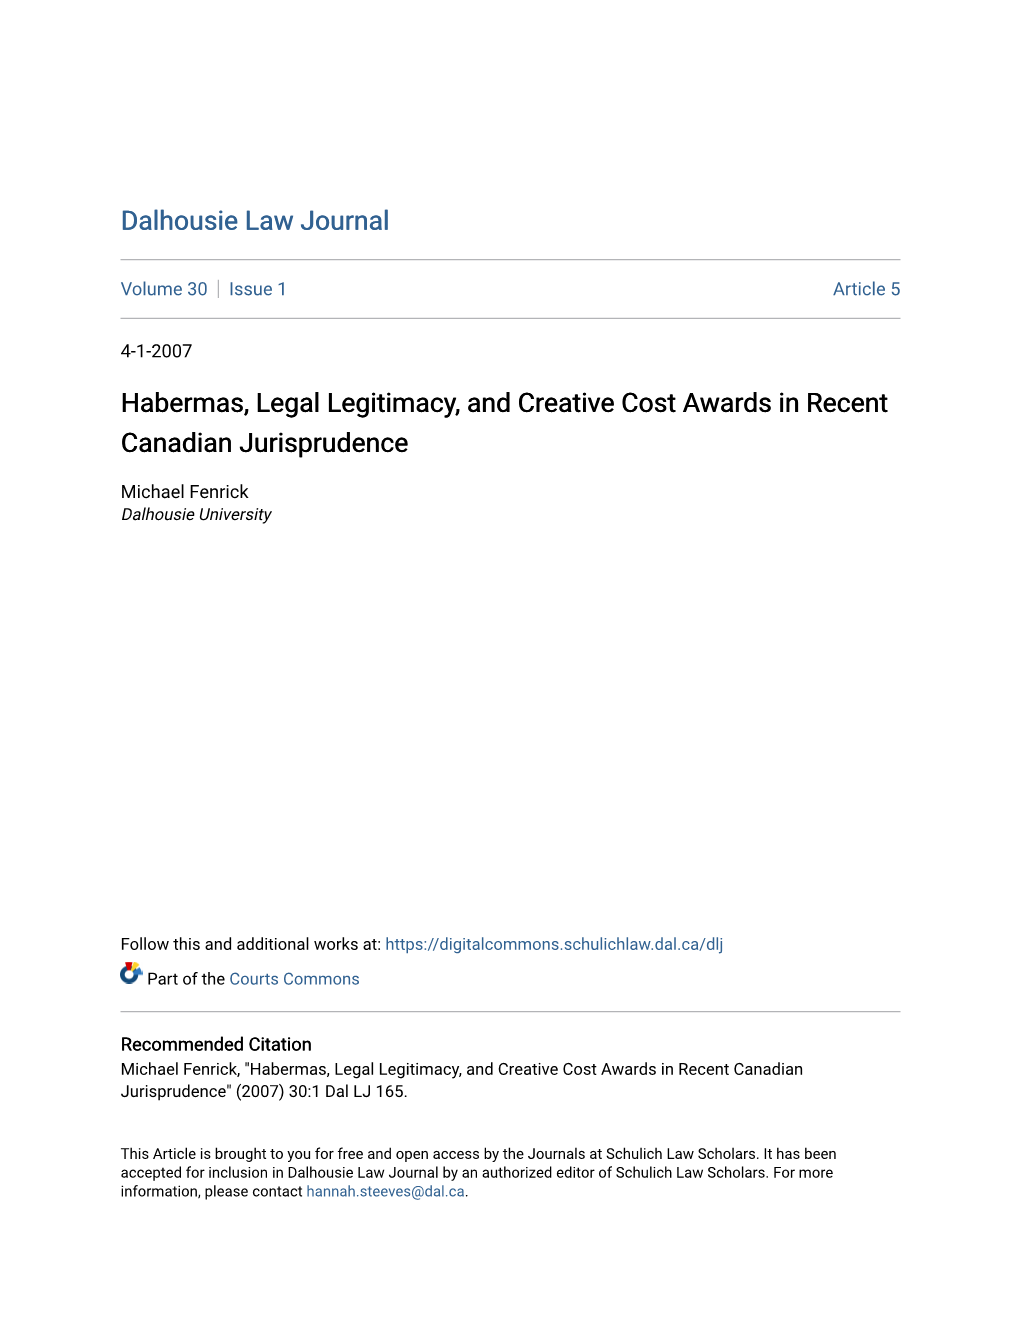 Habermas, Legal Legitimacy, and Creative Cost Awards in Recent Canadian Jurisprudence